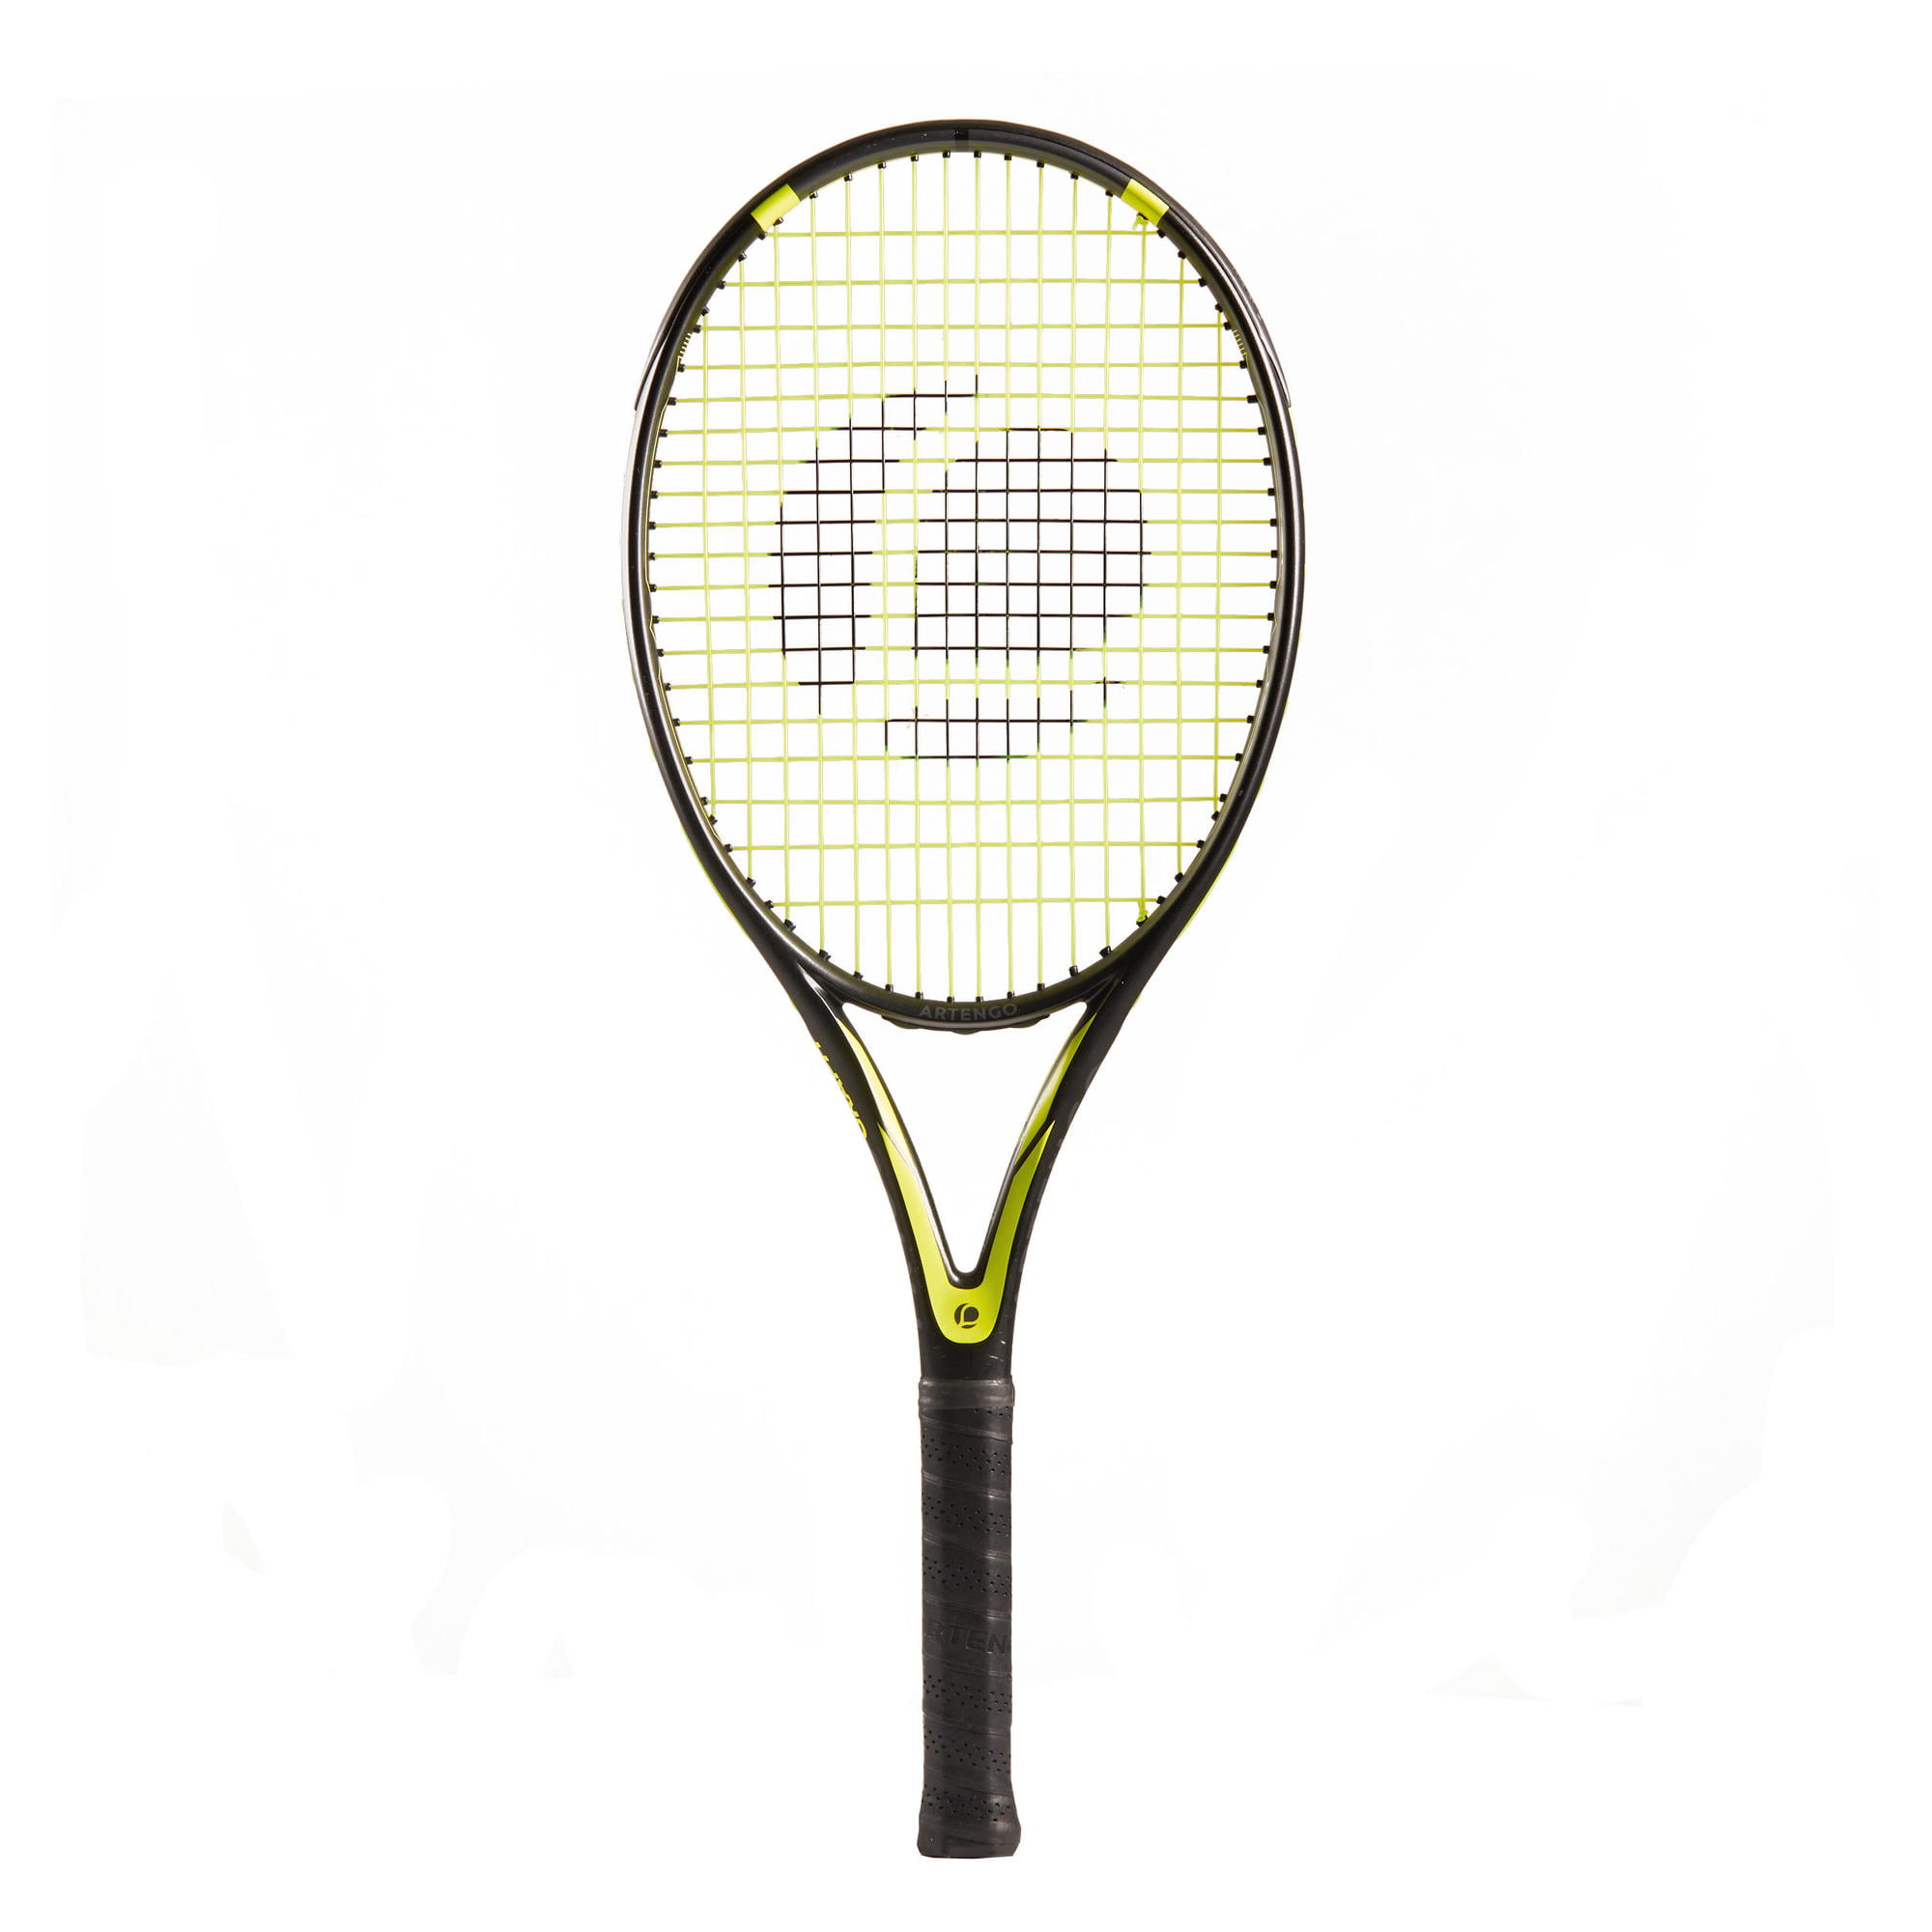 decathlon tennis racket